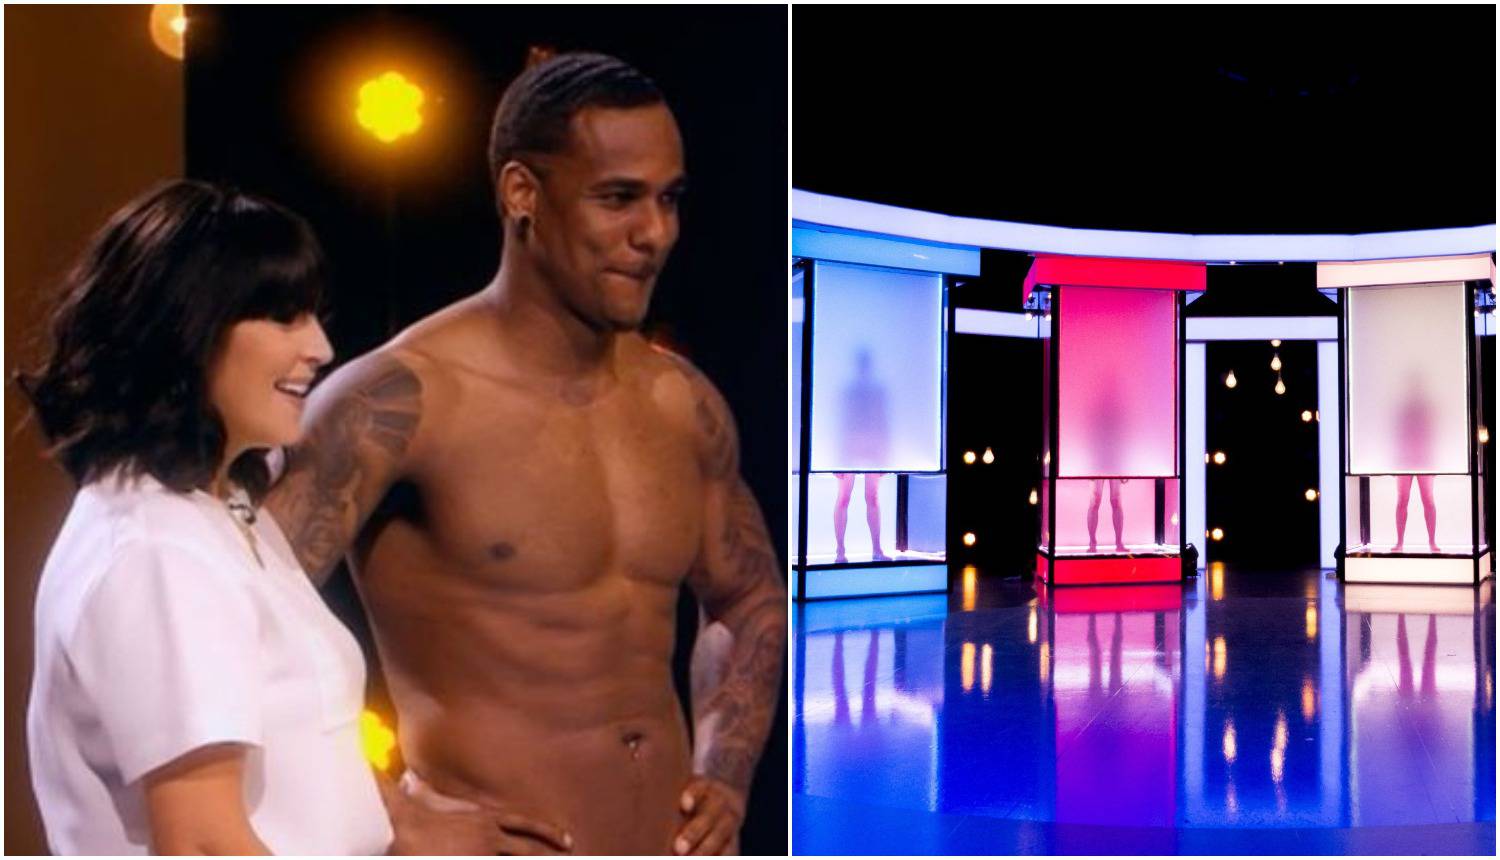 Vratio se kontroverzni show na ekrane: Goli si biraju partnere prema izgledu spolnih organa